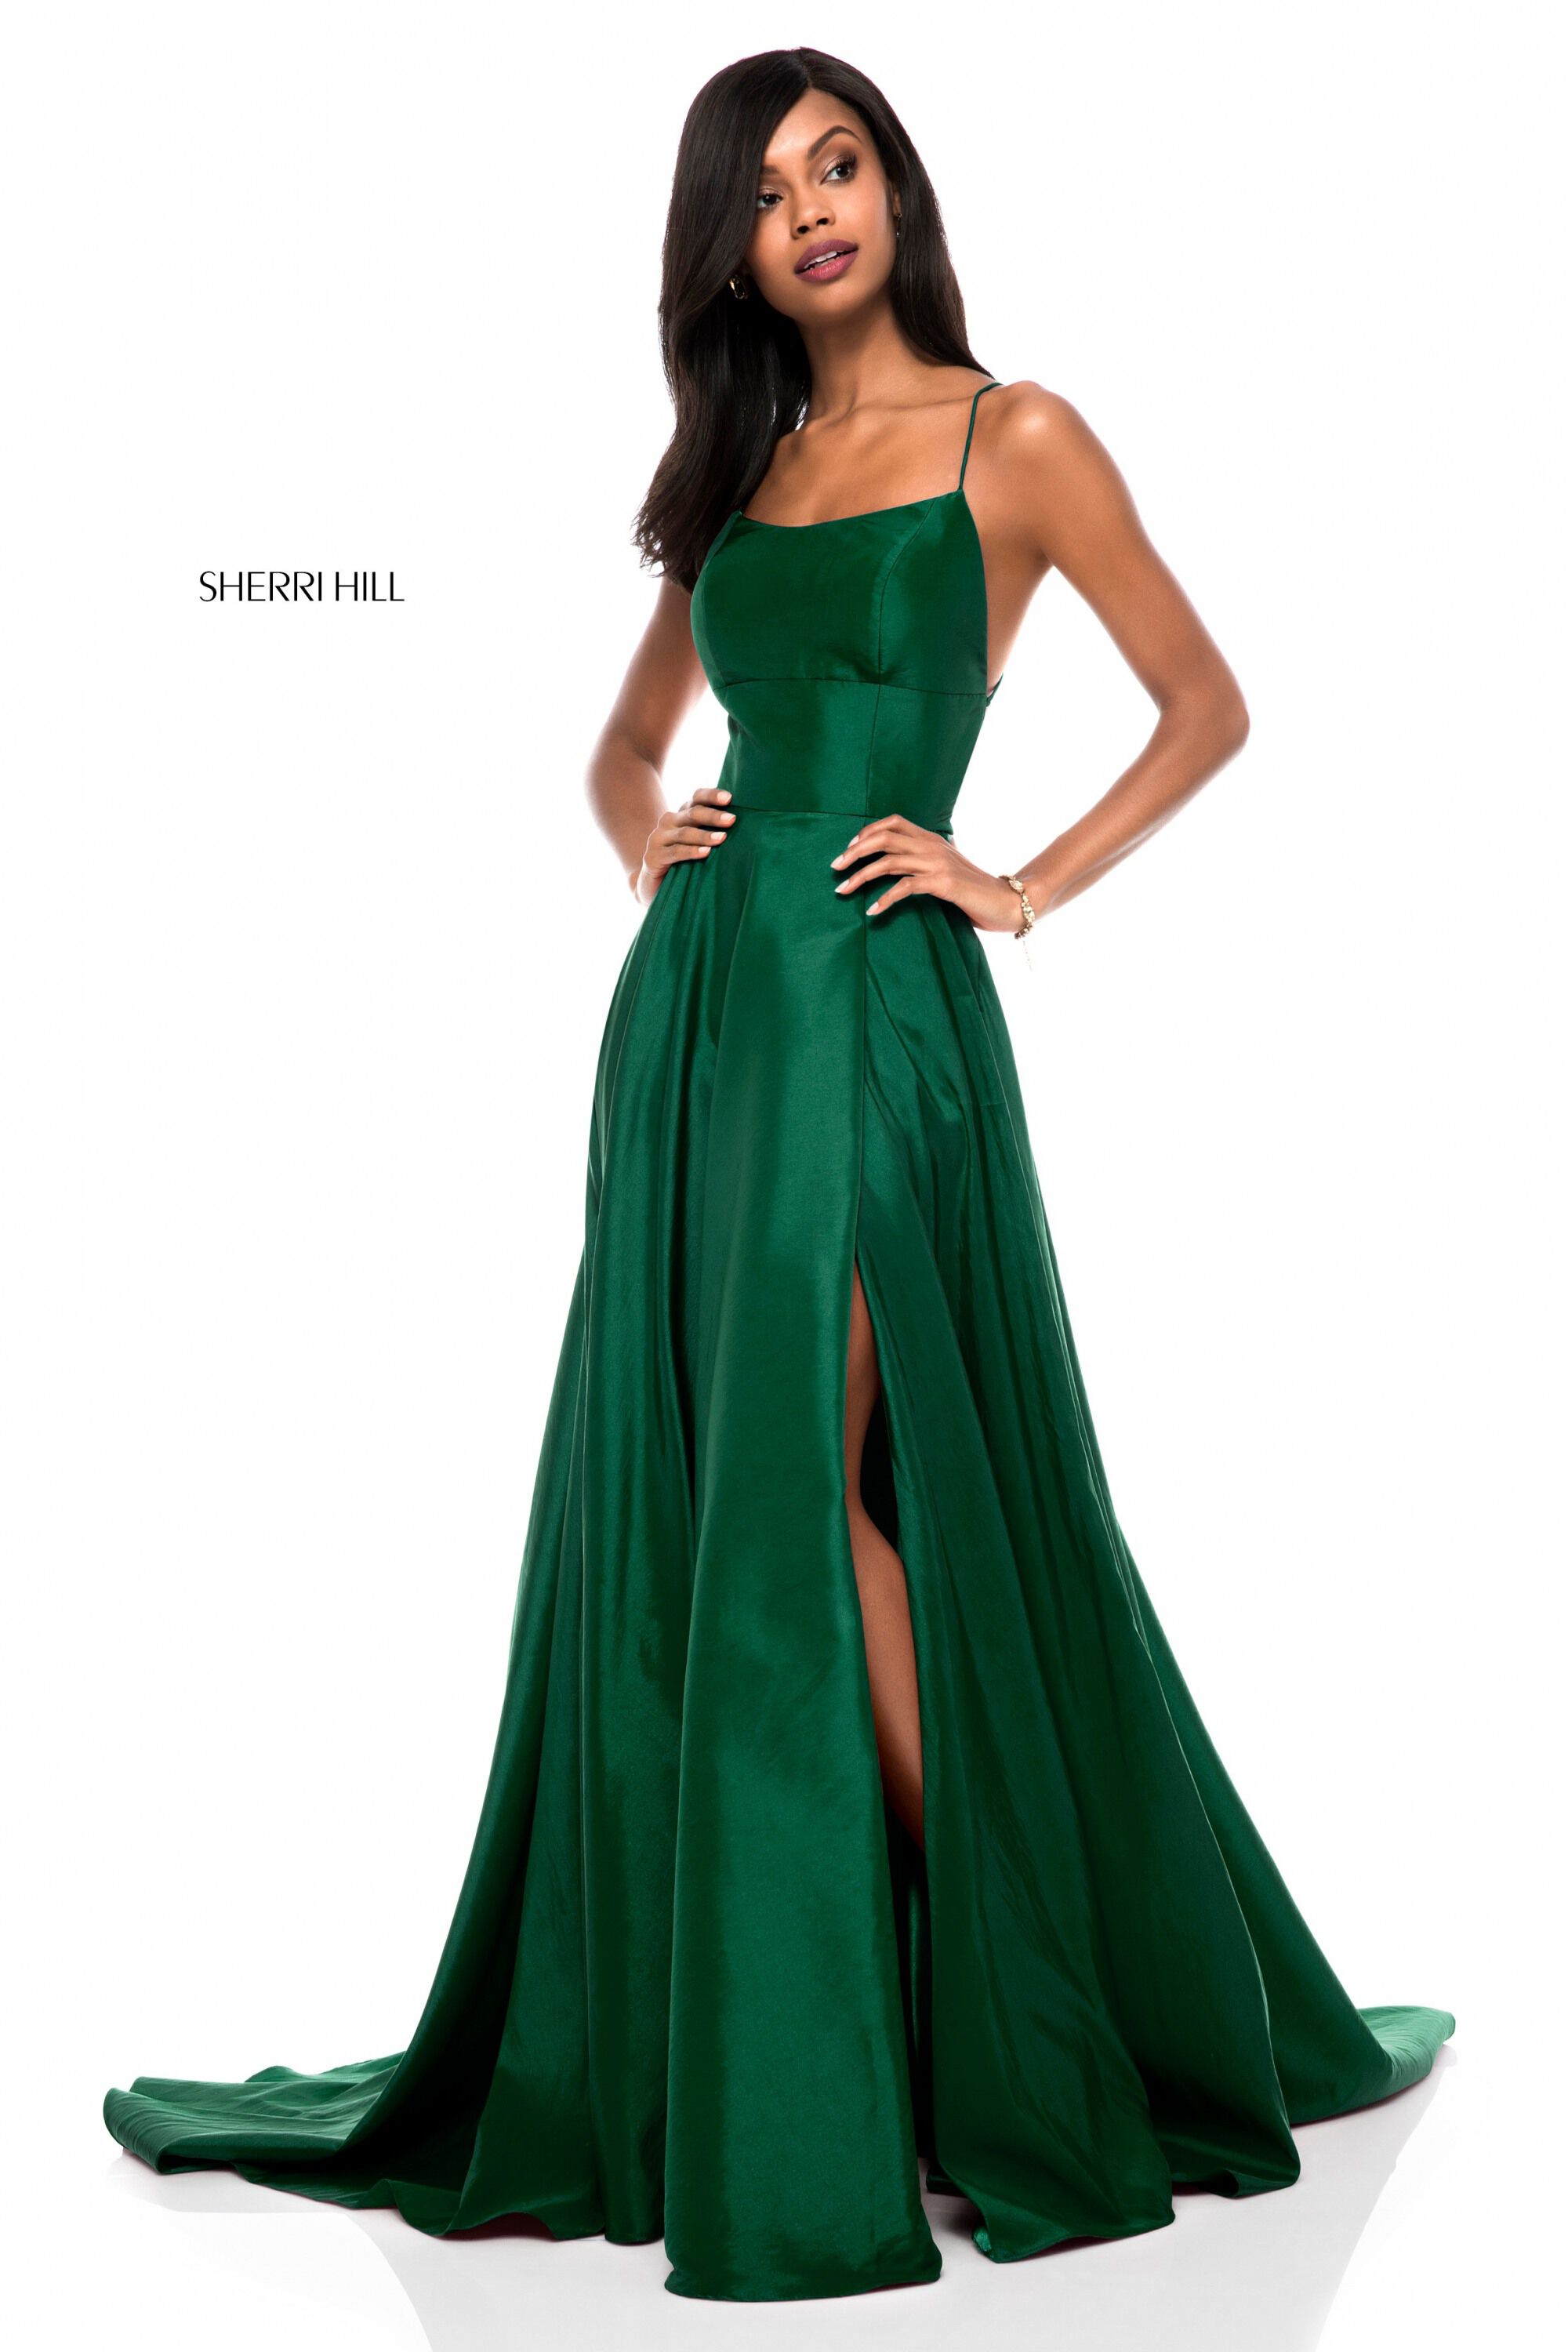 sherri hill emerald green dress